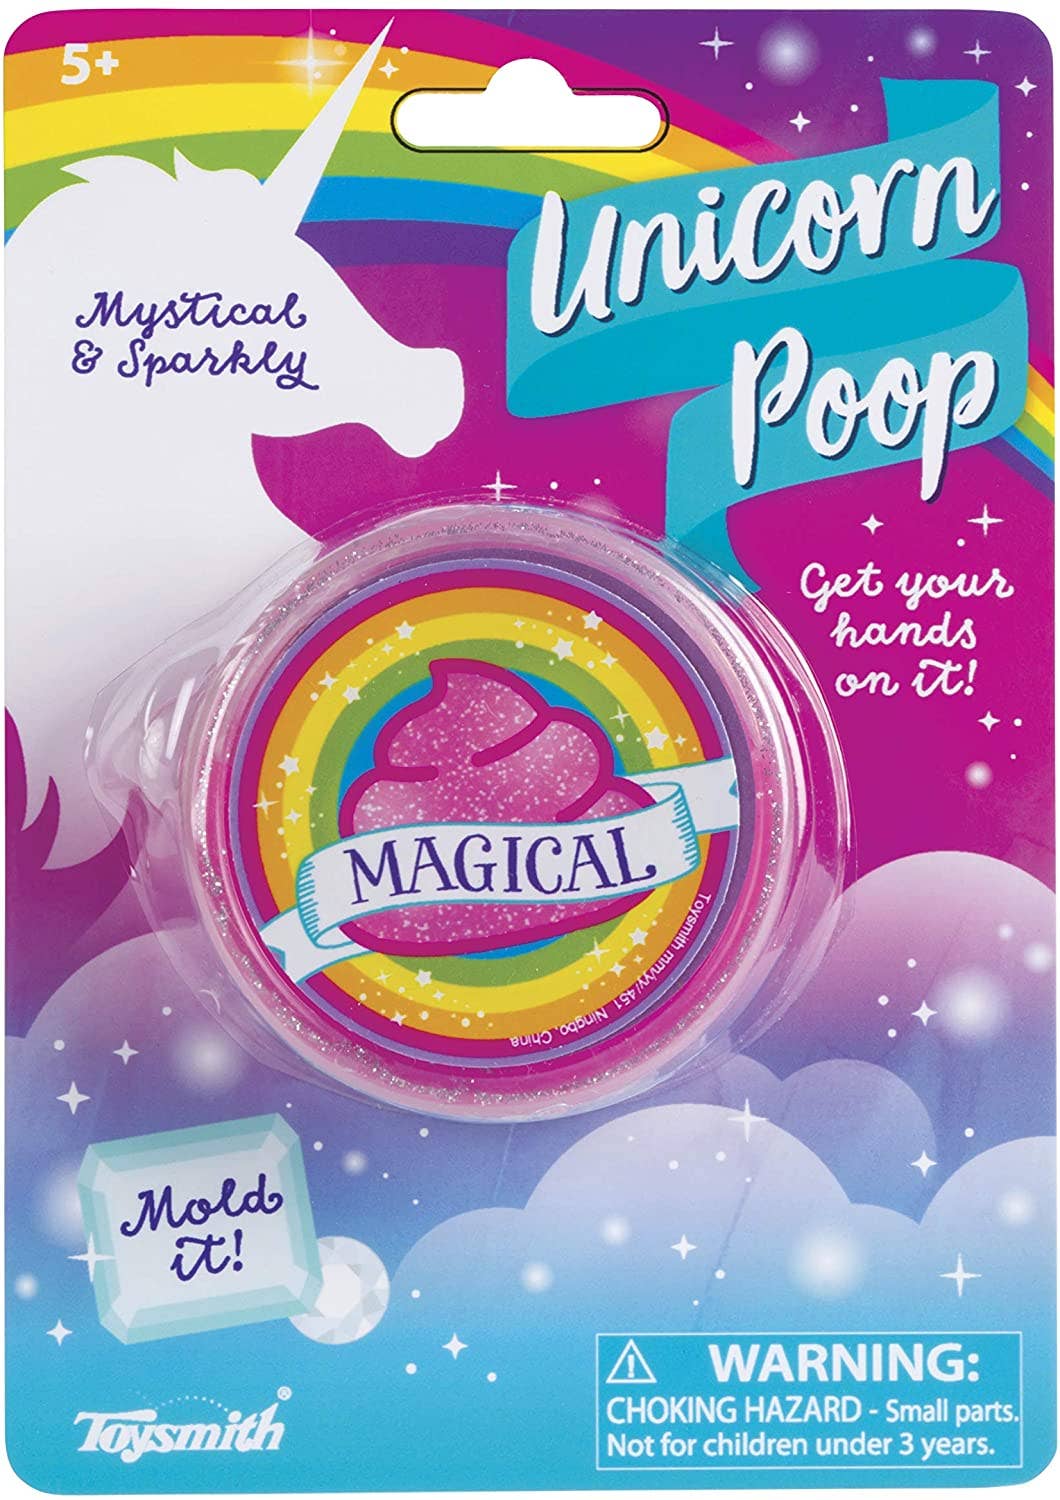 Unicorn Poop, Glittery Pink Putty Poop, Best Seller/Reusable